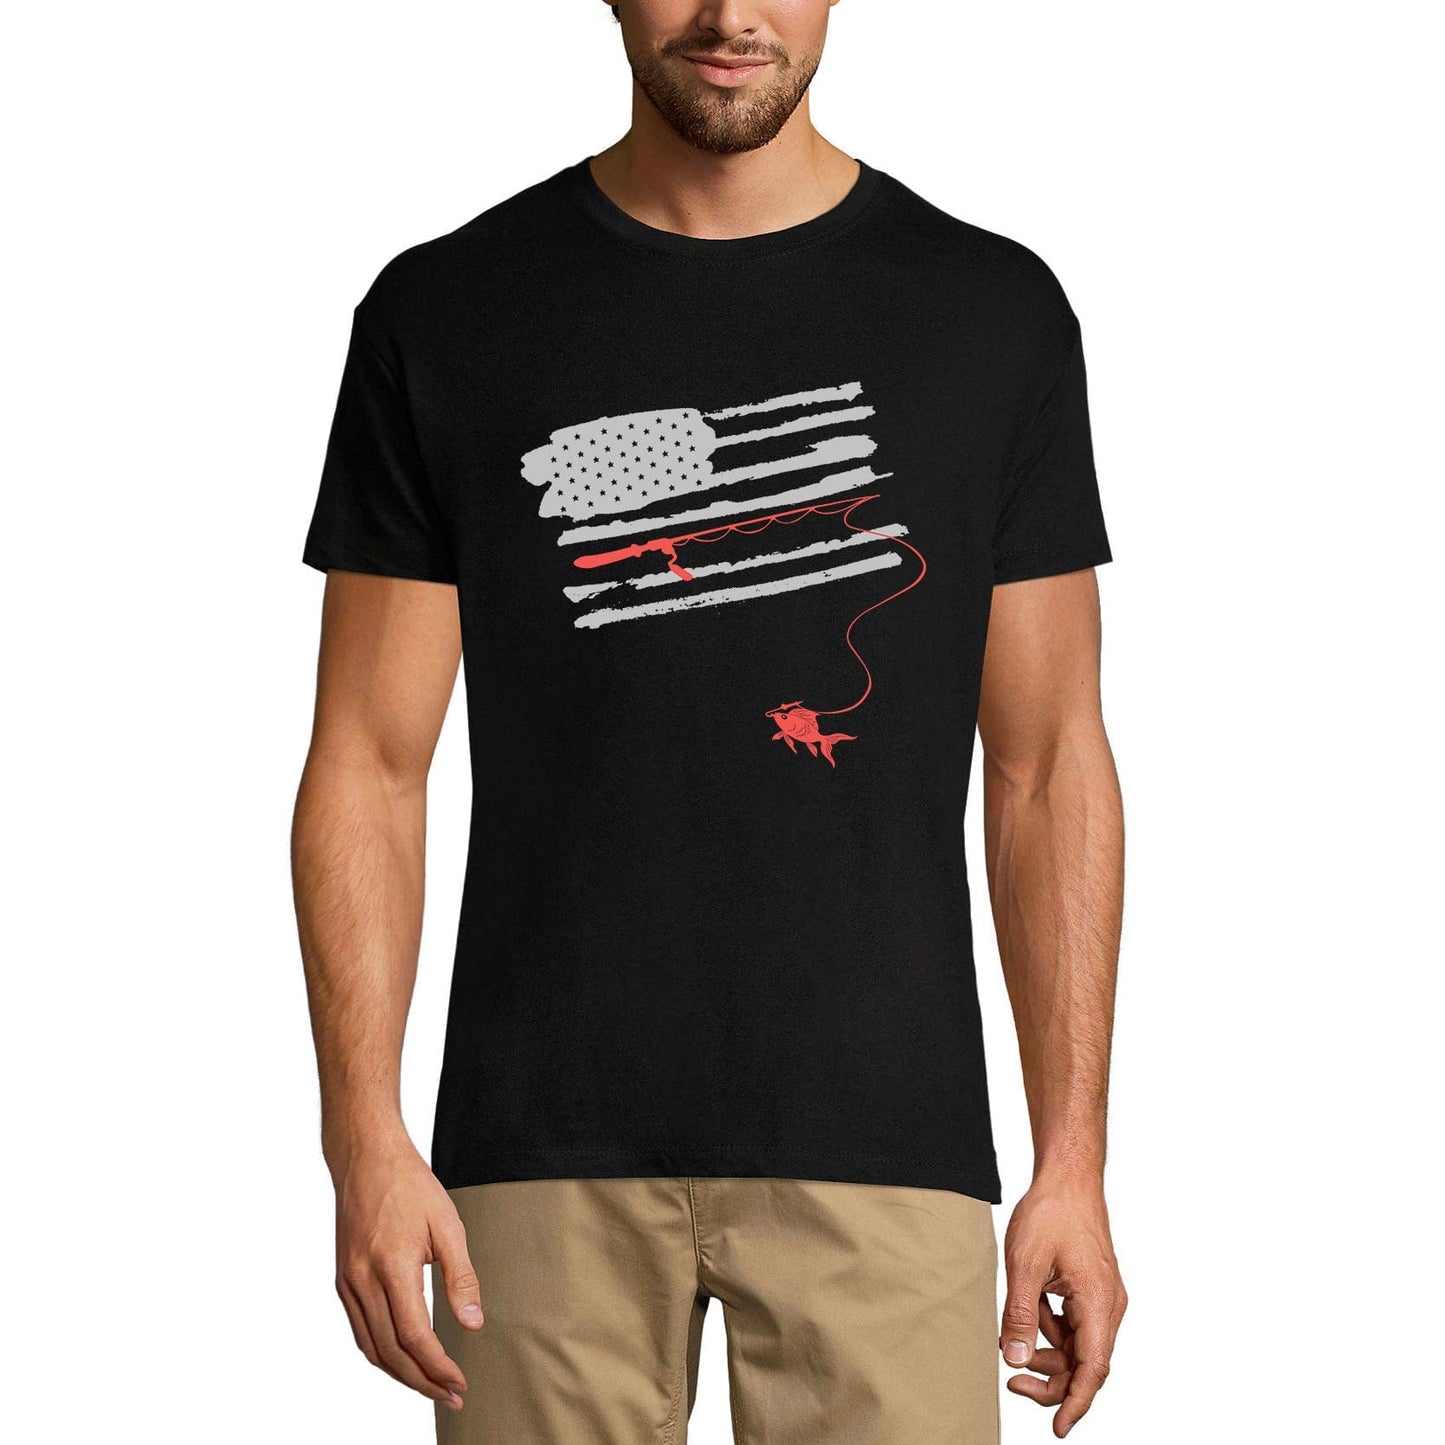 ULTRABASIC Men's Novelty T-Shirt US Flag Fishing Design - Fisherman Tee Shirt